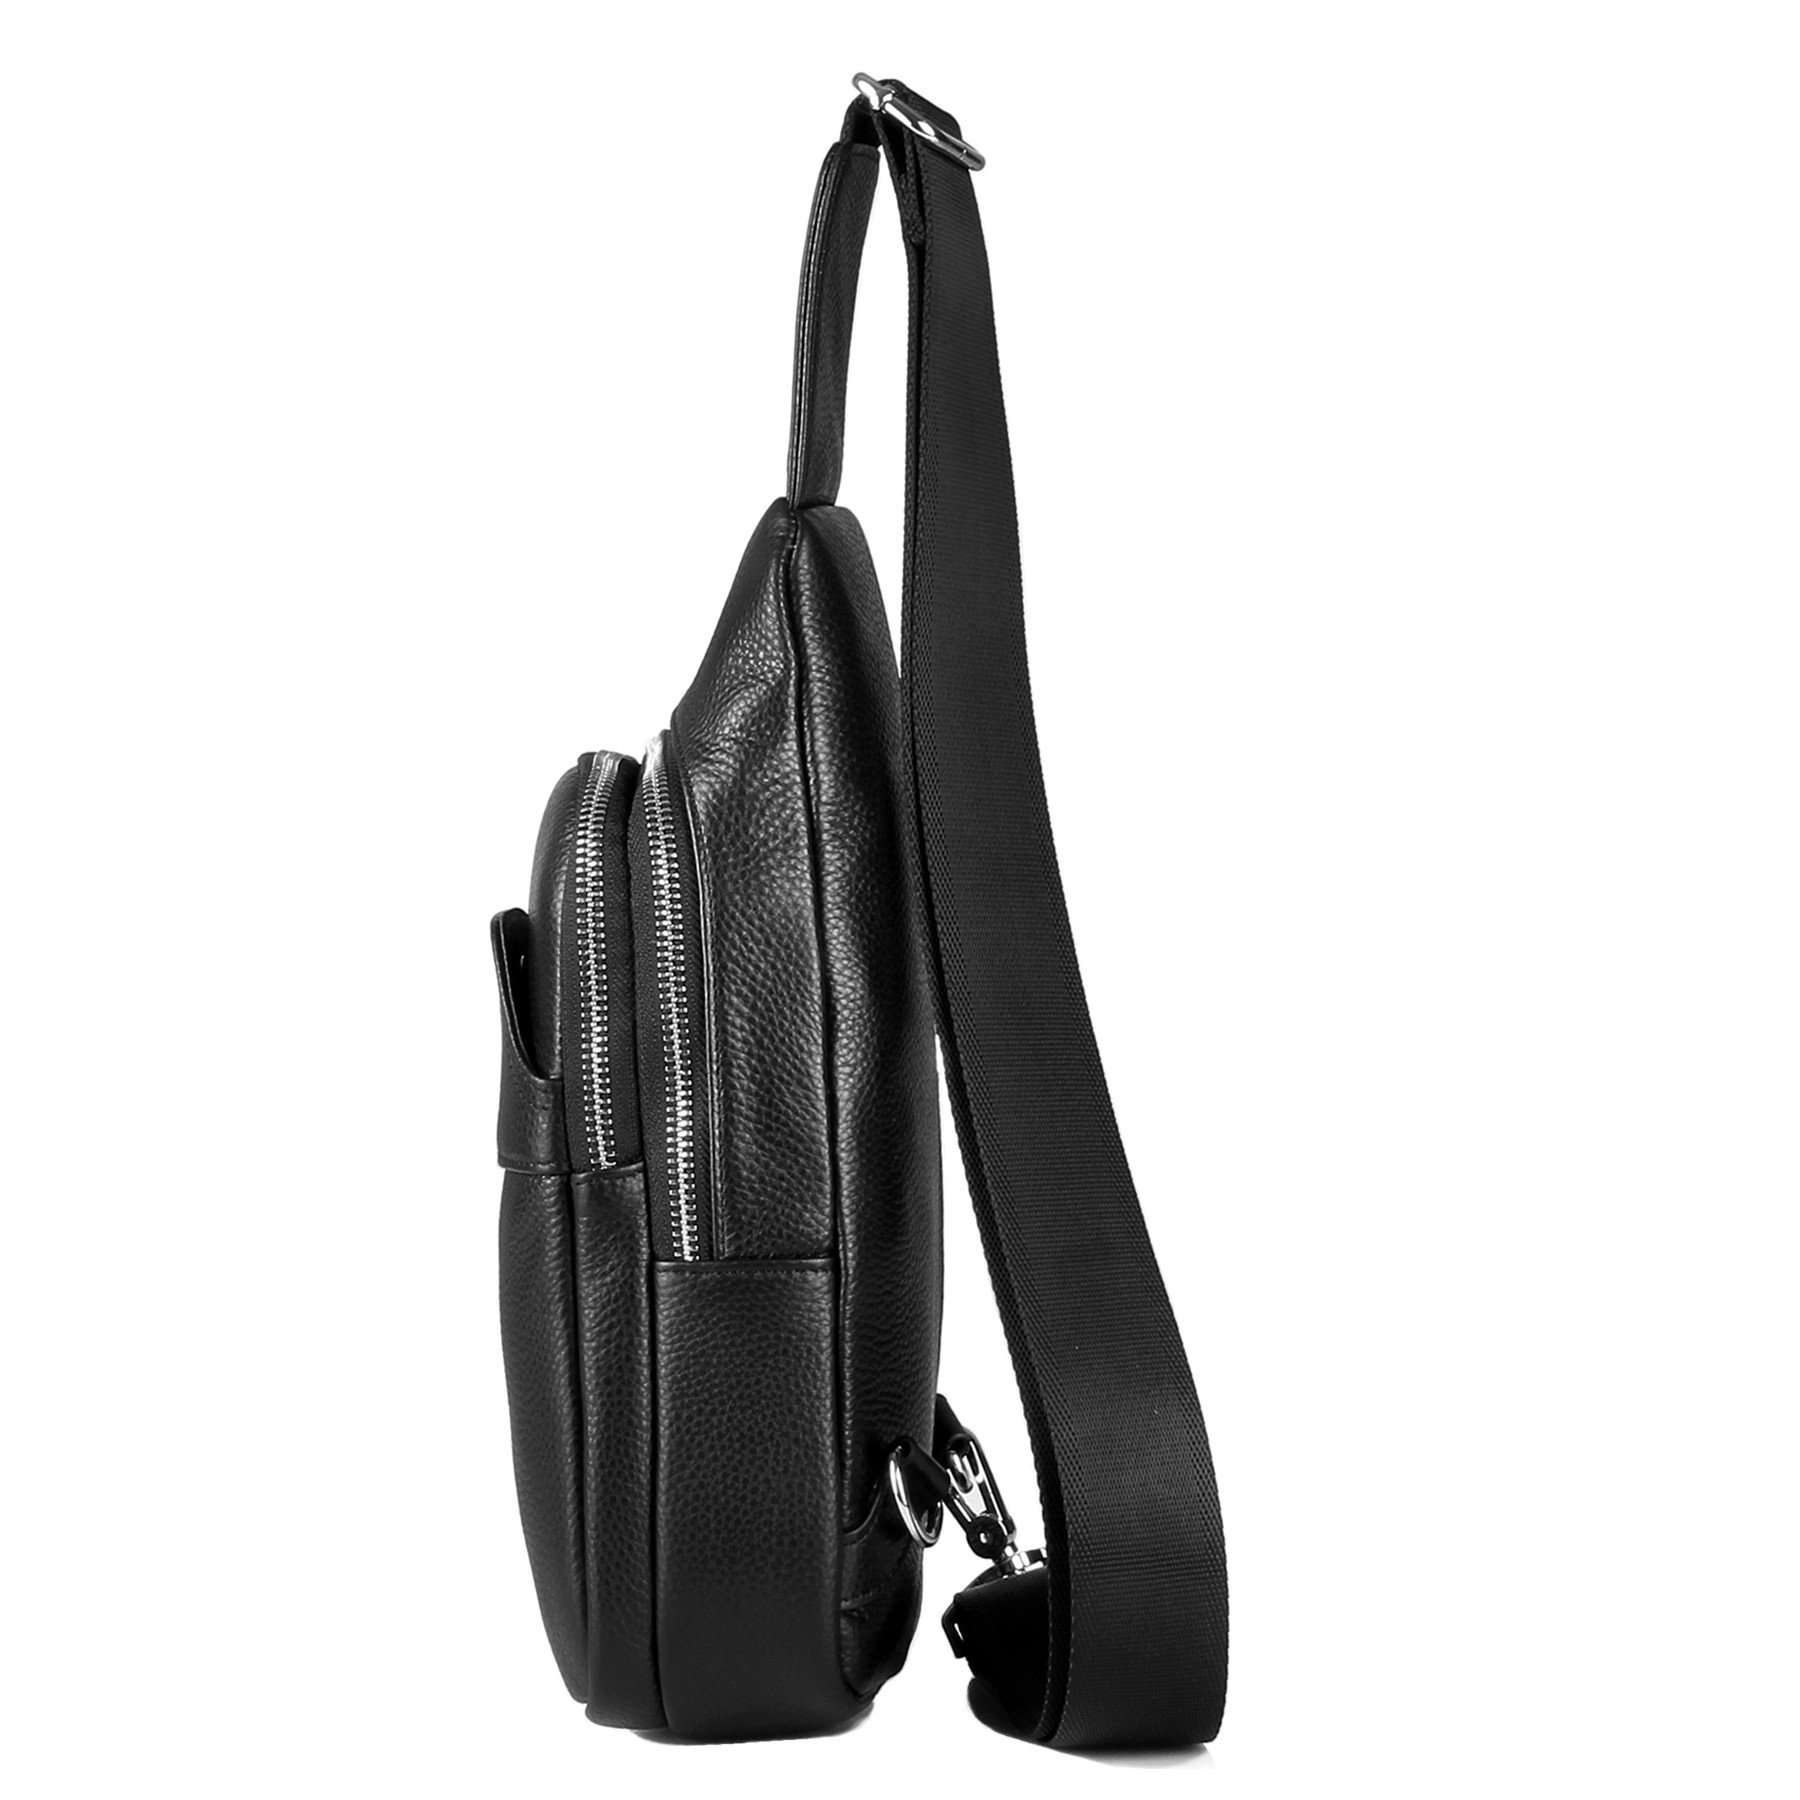 DK86 Genuine Leather Sling Bag for Men and Women Crossbody Small Fanny Packs Chest Travel Backpack Daypack Black